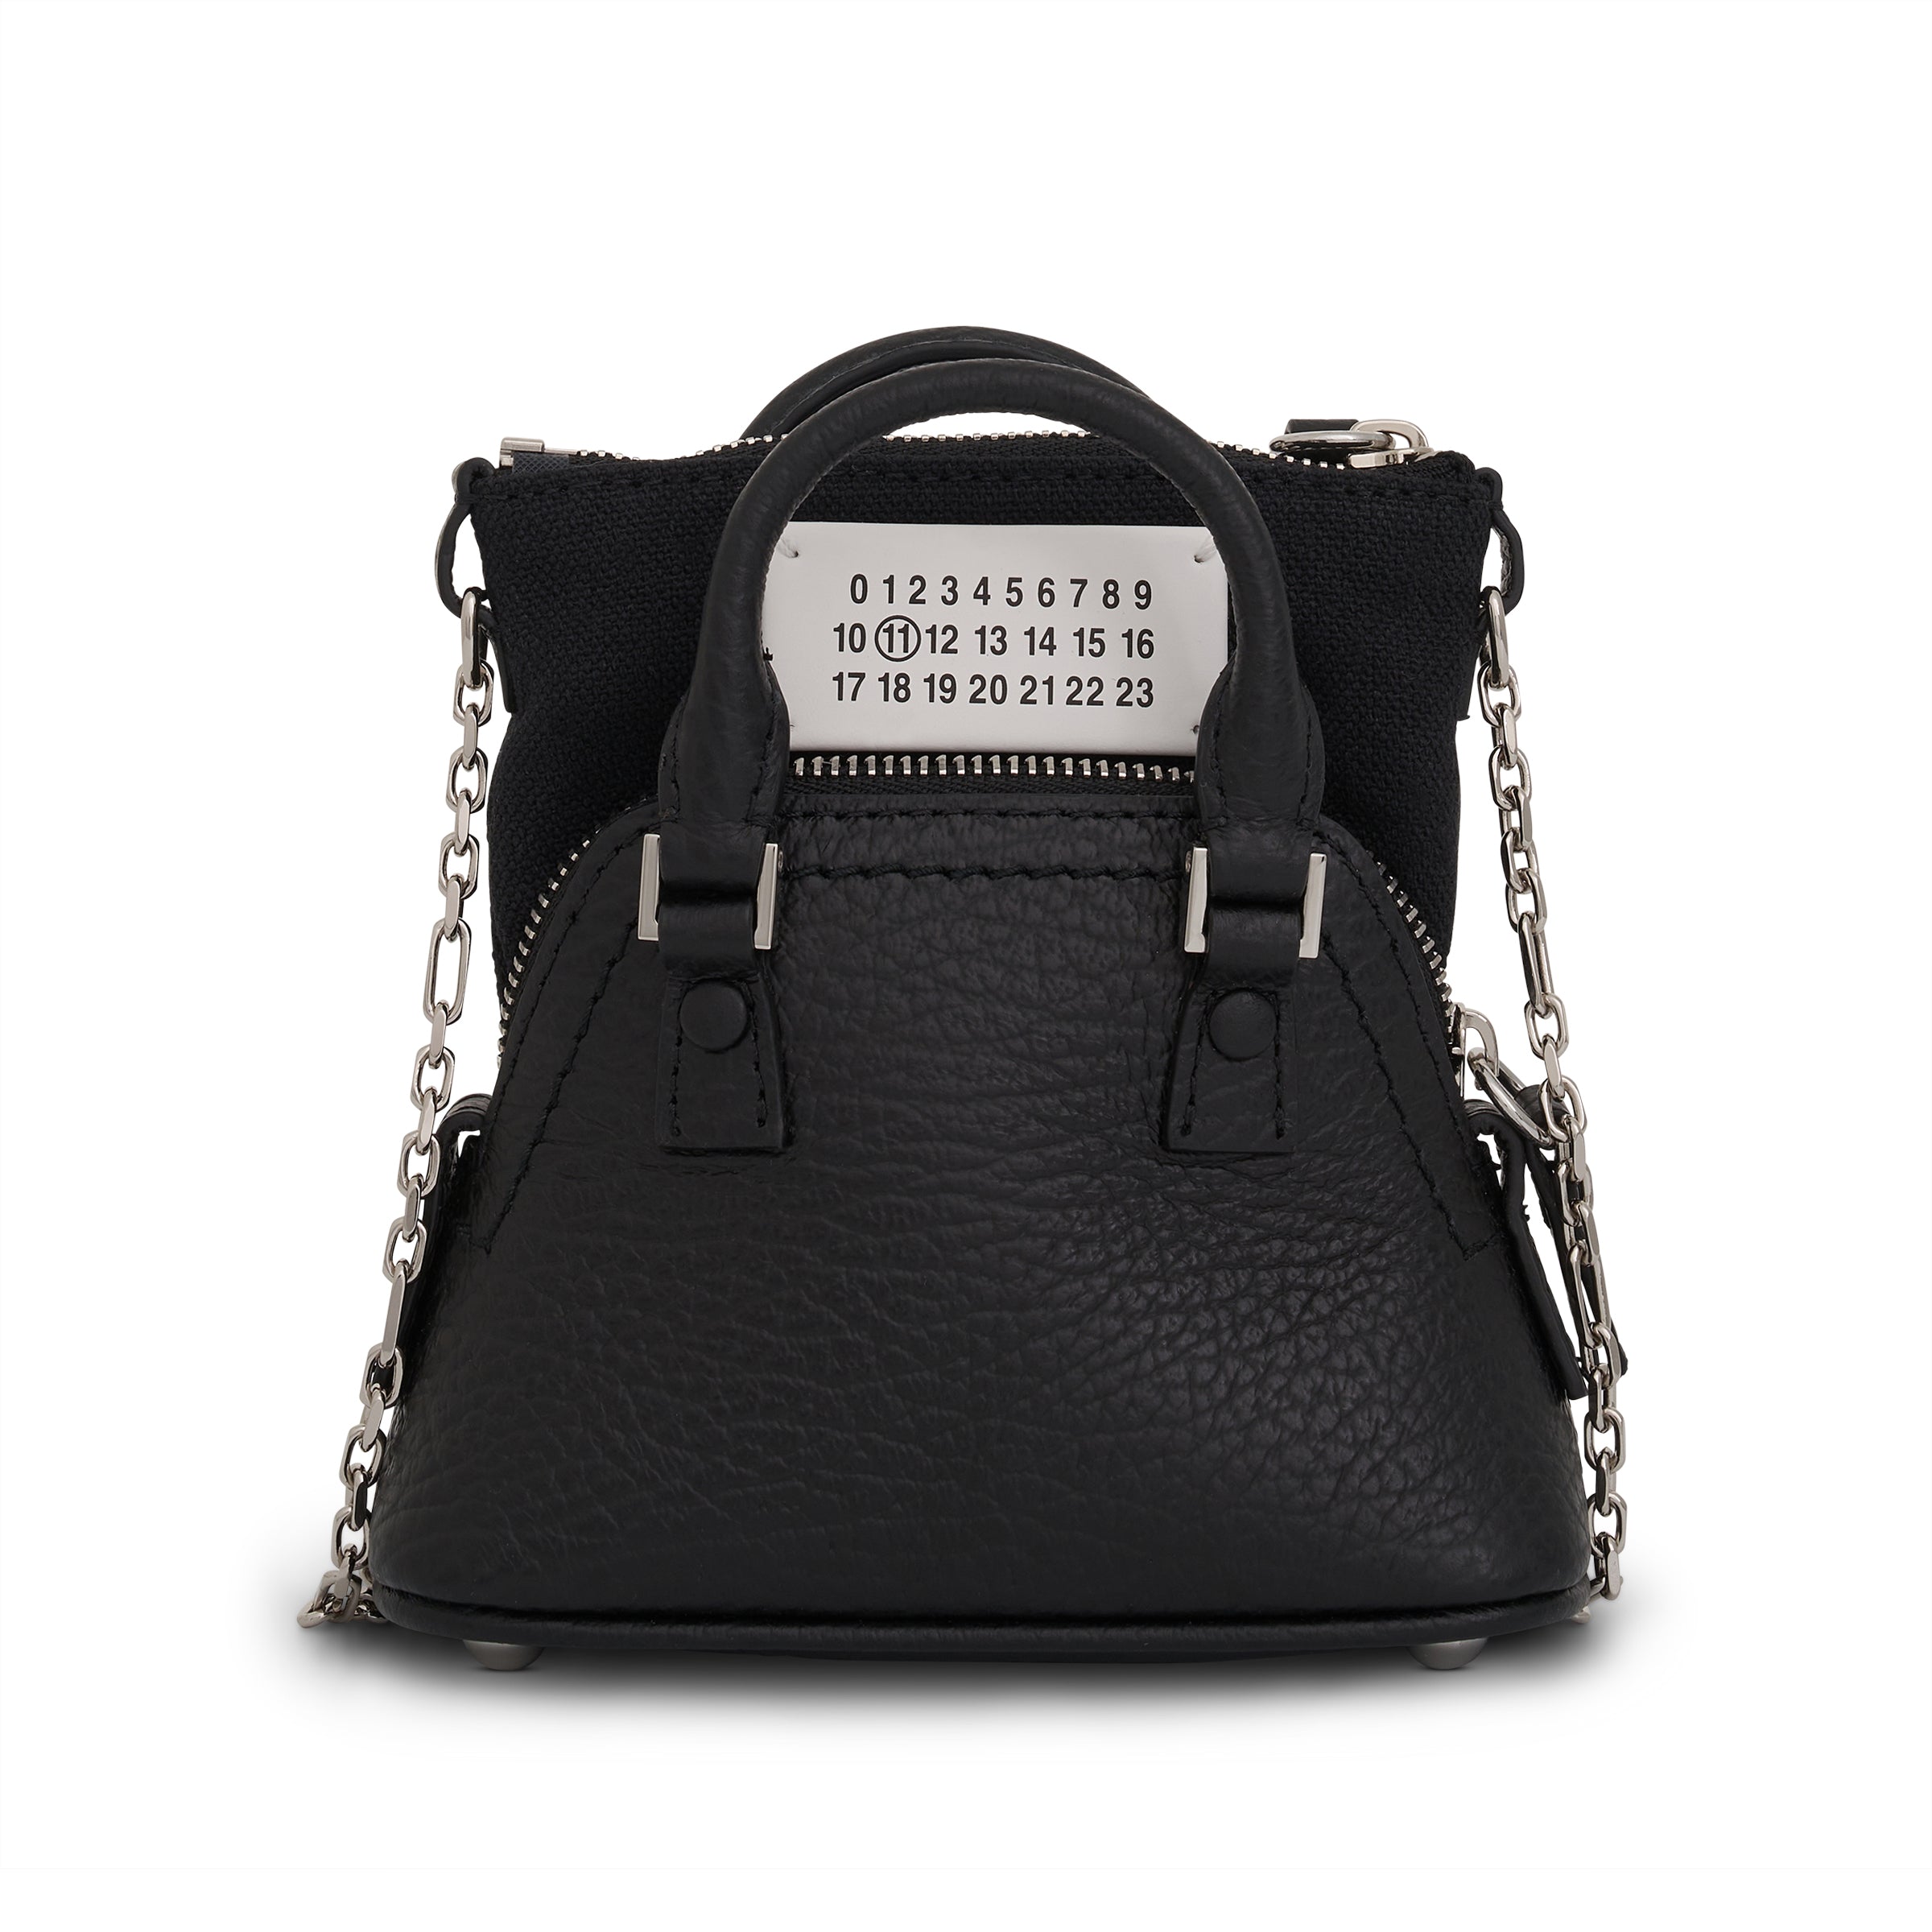 maison margiela baby 5ac leather bag in black regular price $ 1750 . 00 ...